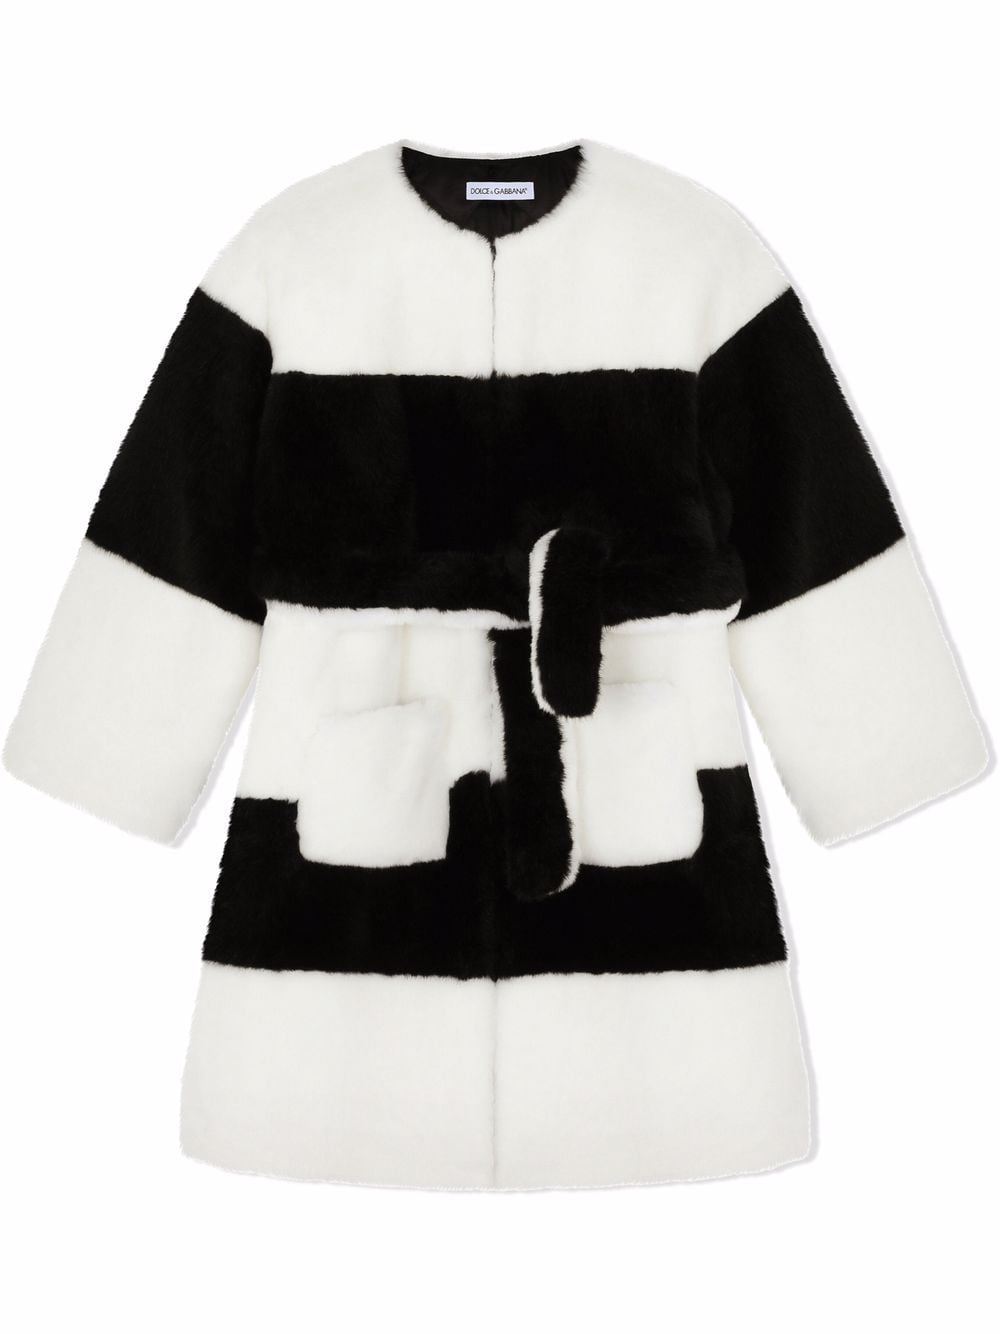 Black and white coat for girls